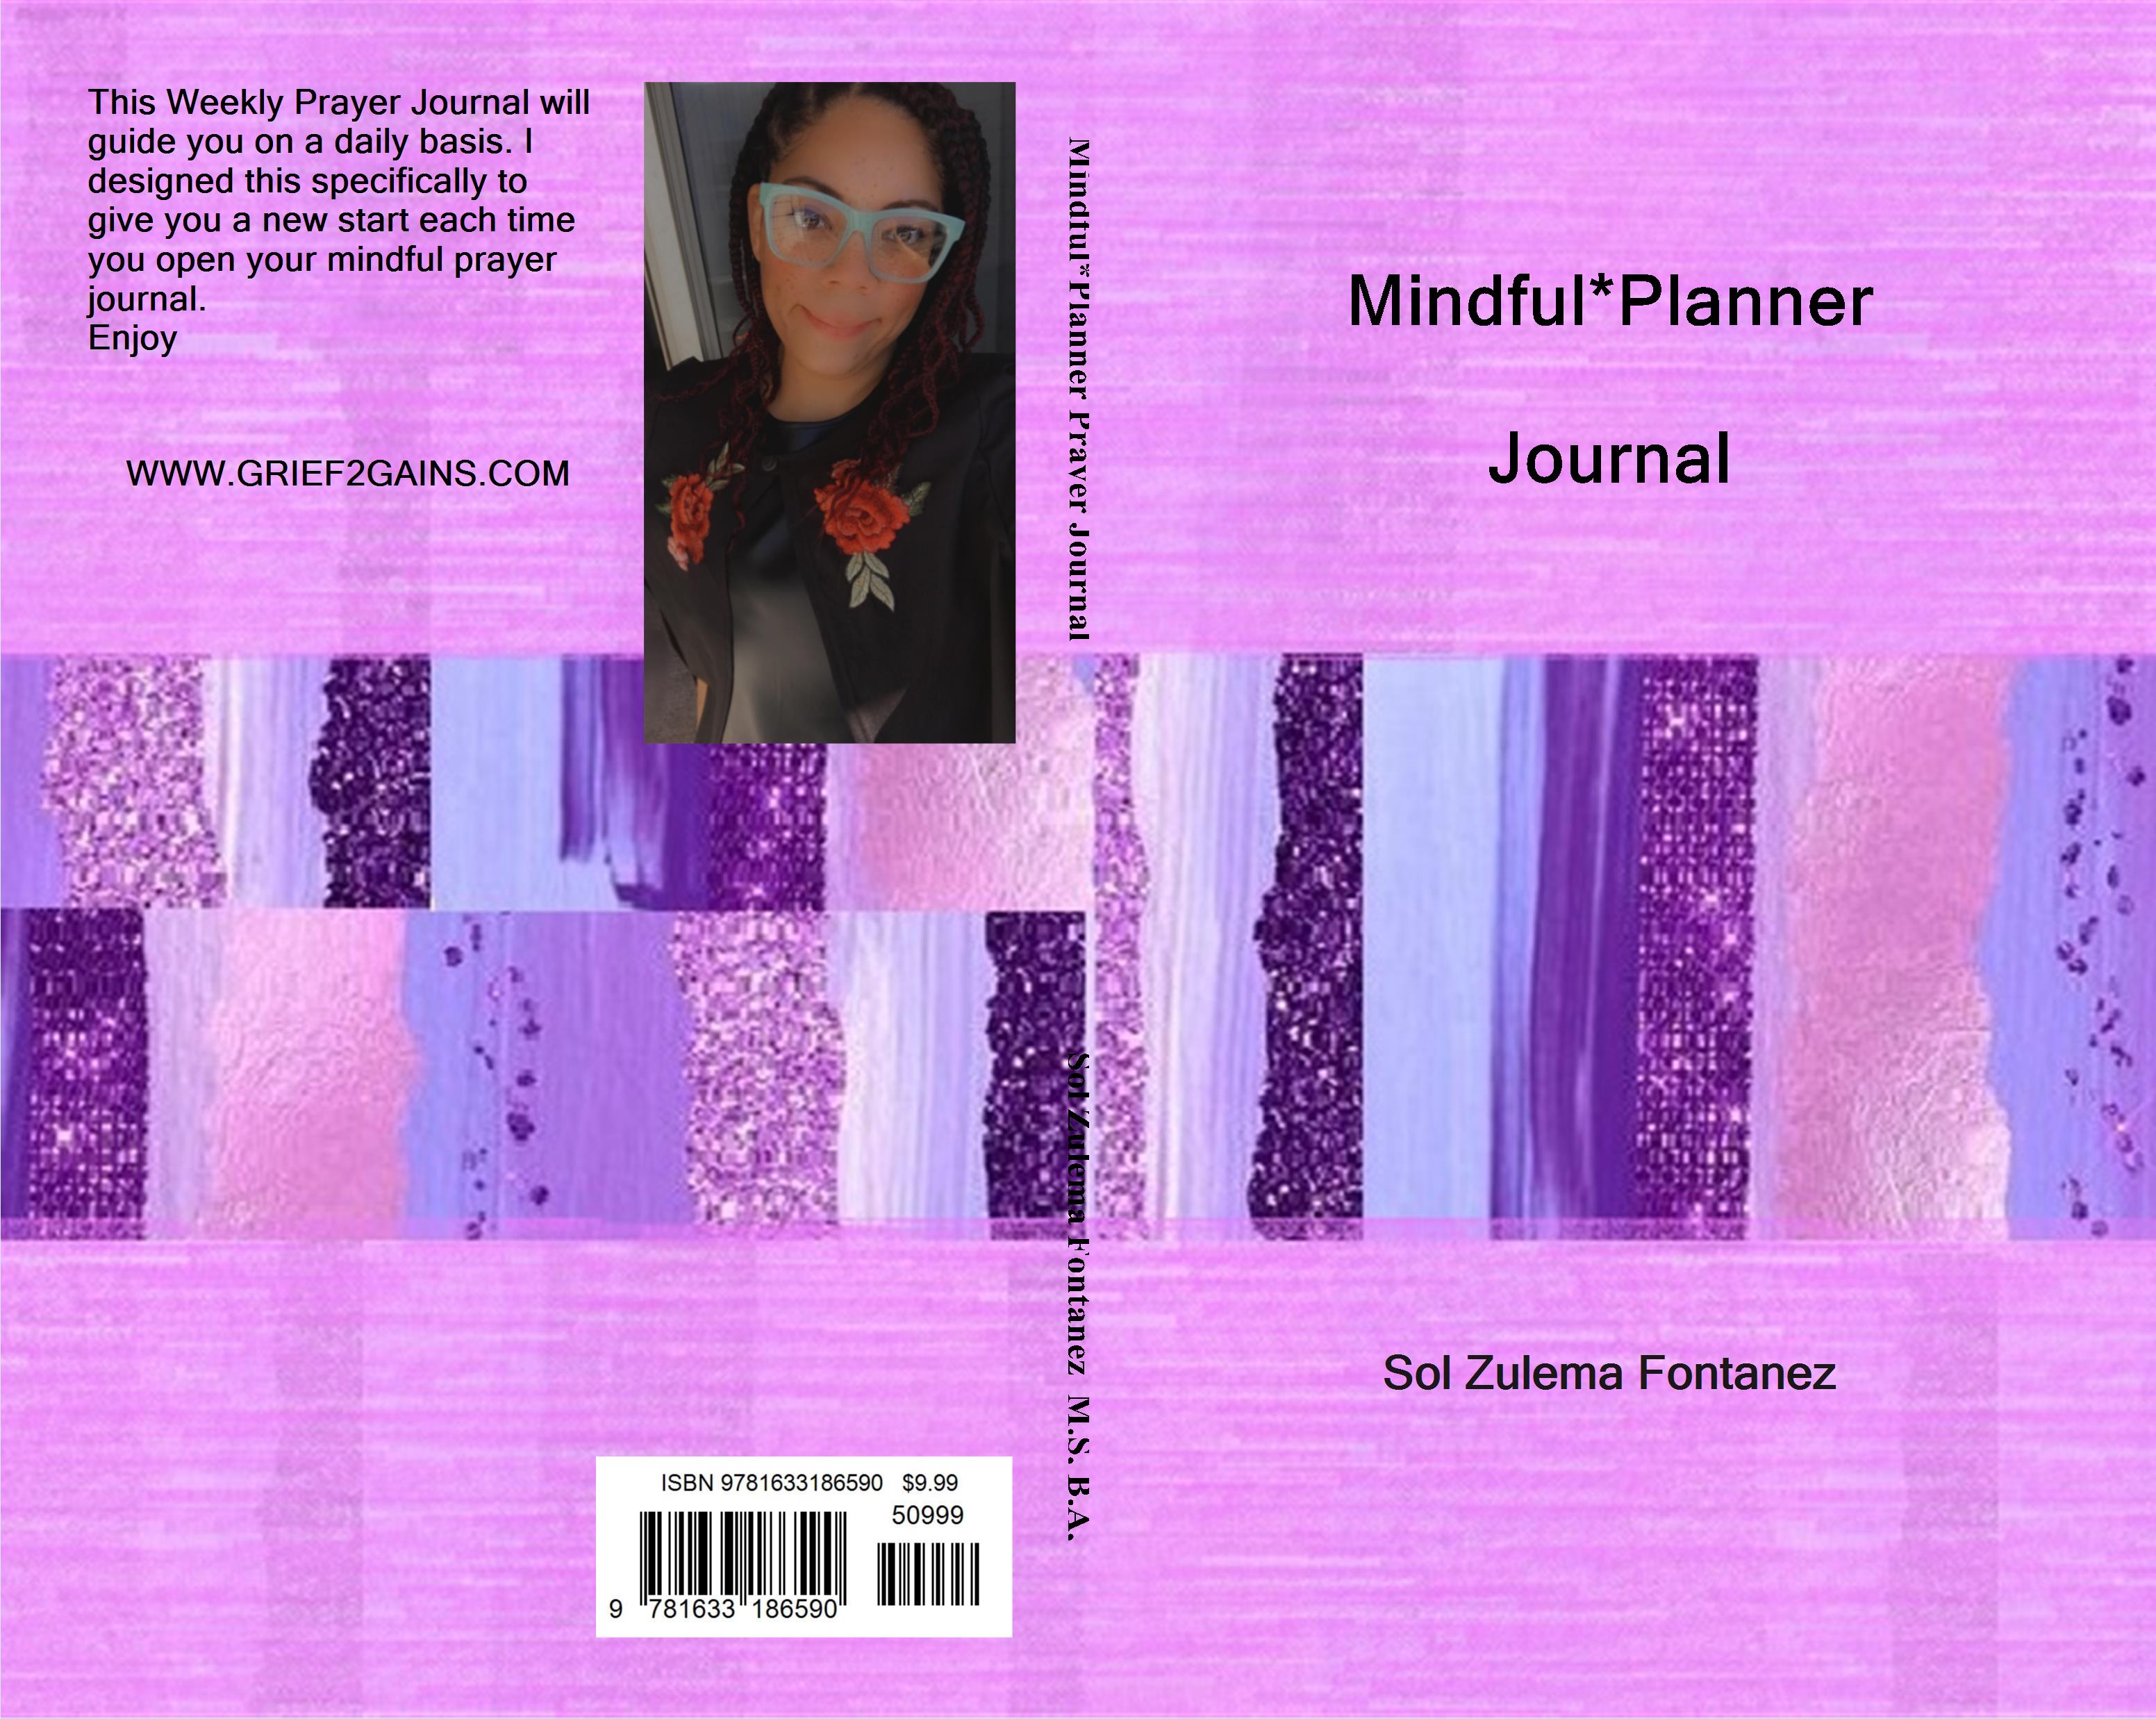 Mindful*Planner Prayer Journal cover image